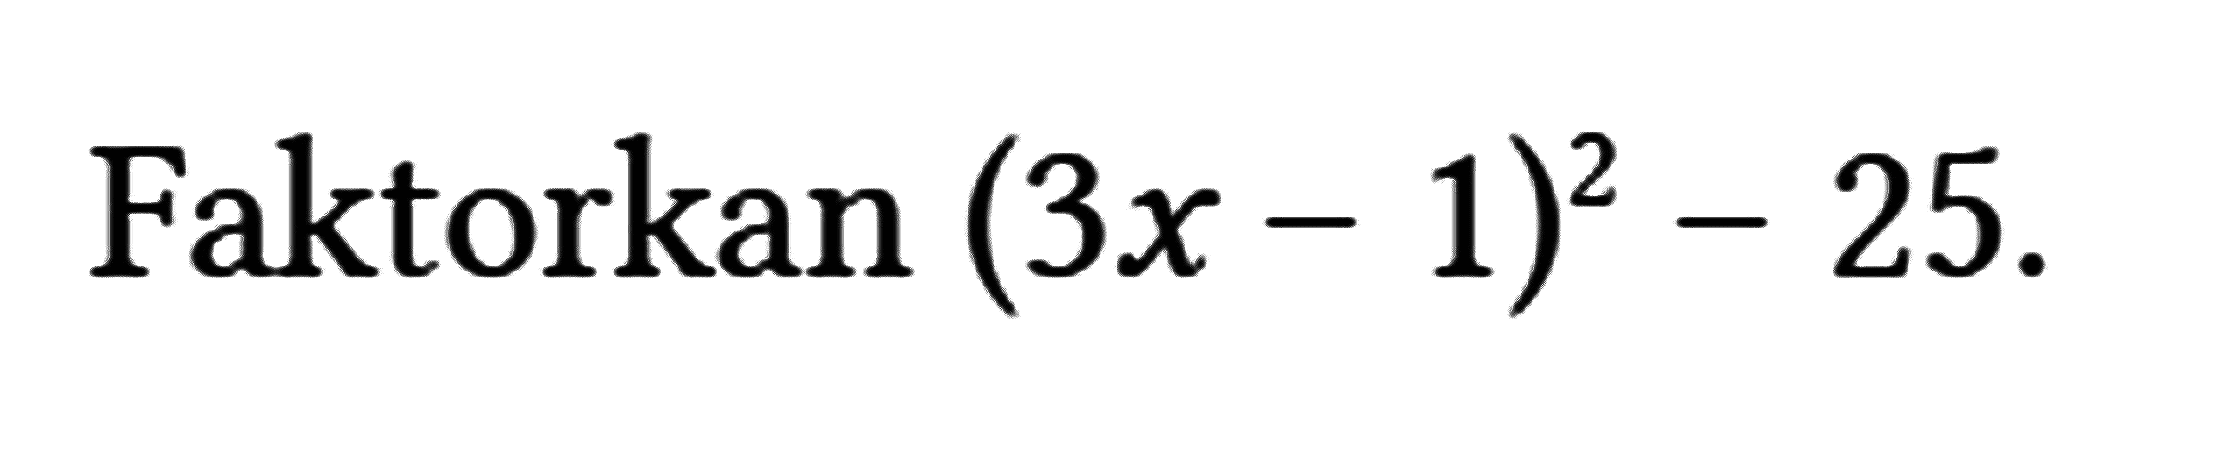 Faktorkan (3 x-1)^(2)-25